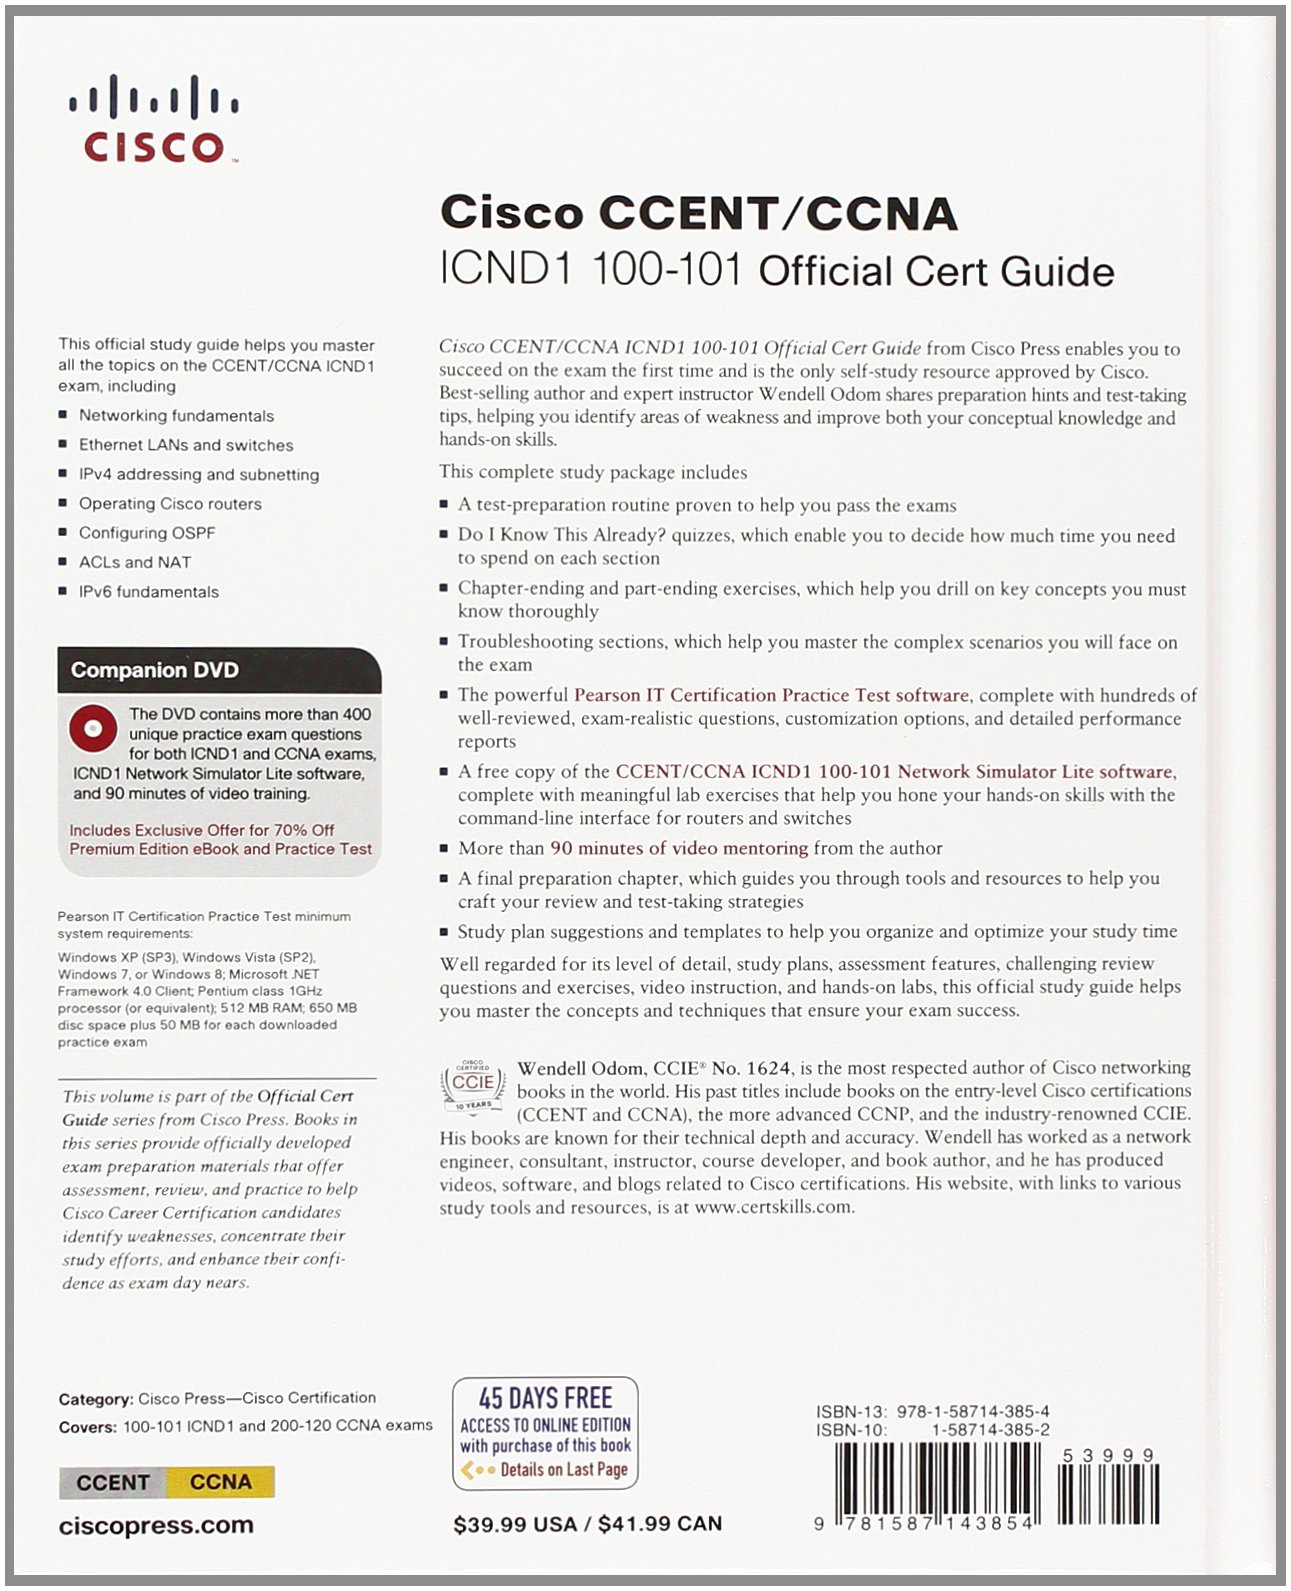 Cisco CCENT/CCNA ICND1 100-101 Official Cert Guide